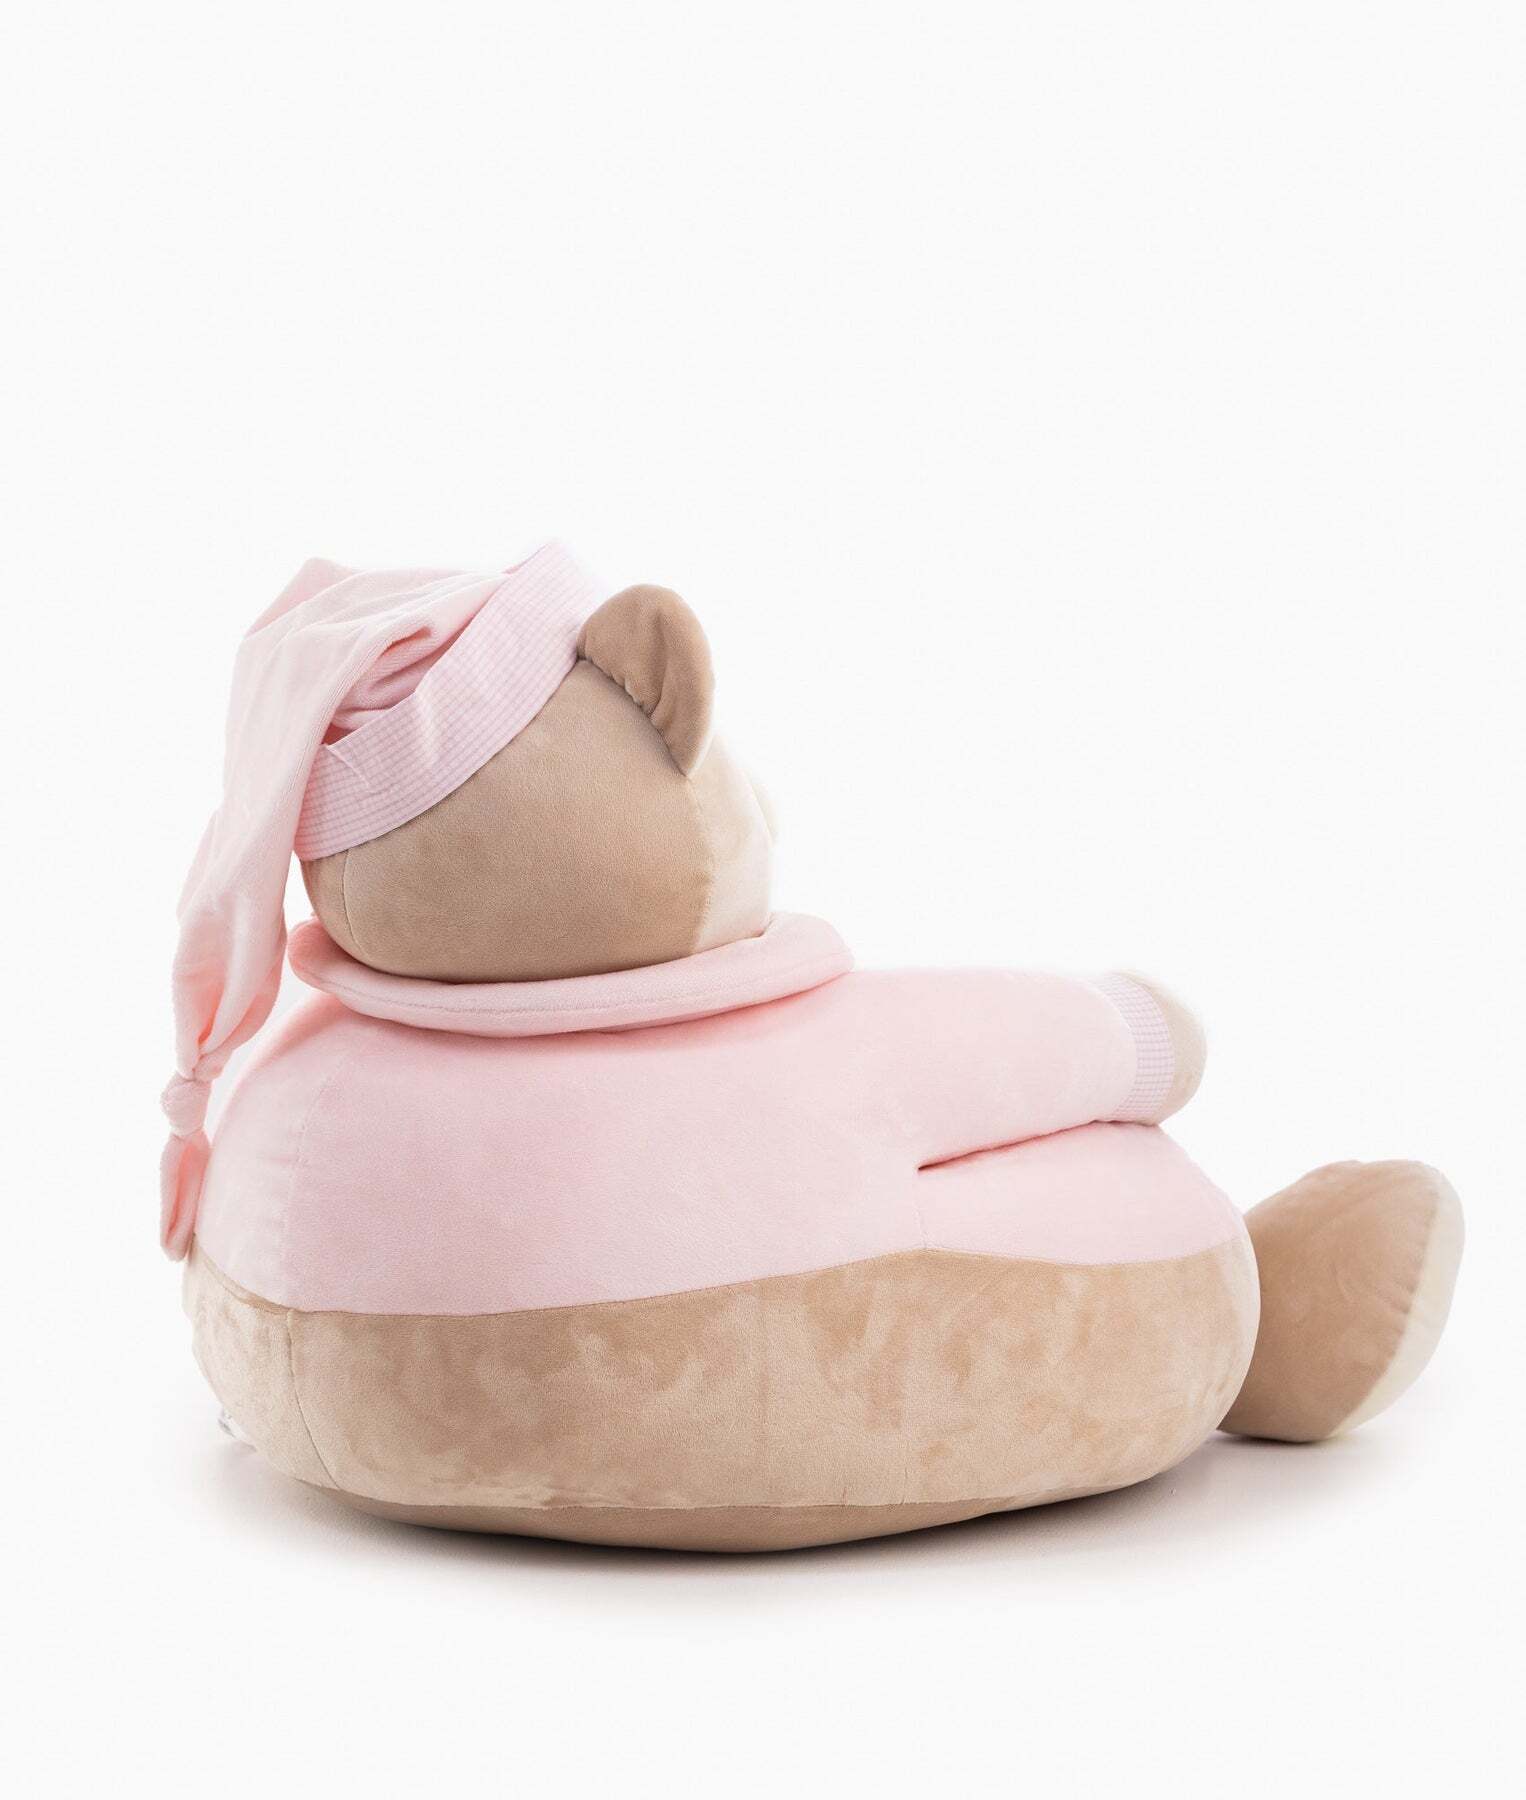 baby-bear-armchair-pink-455_1800x1800